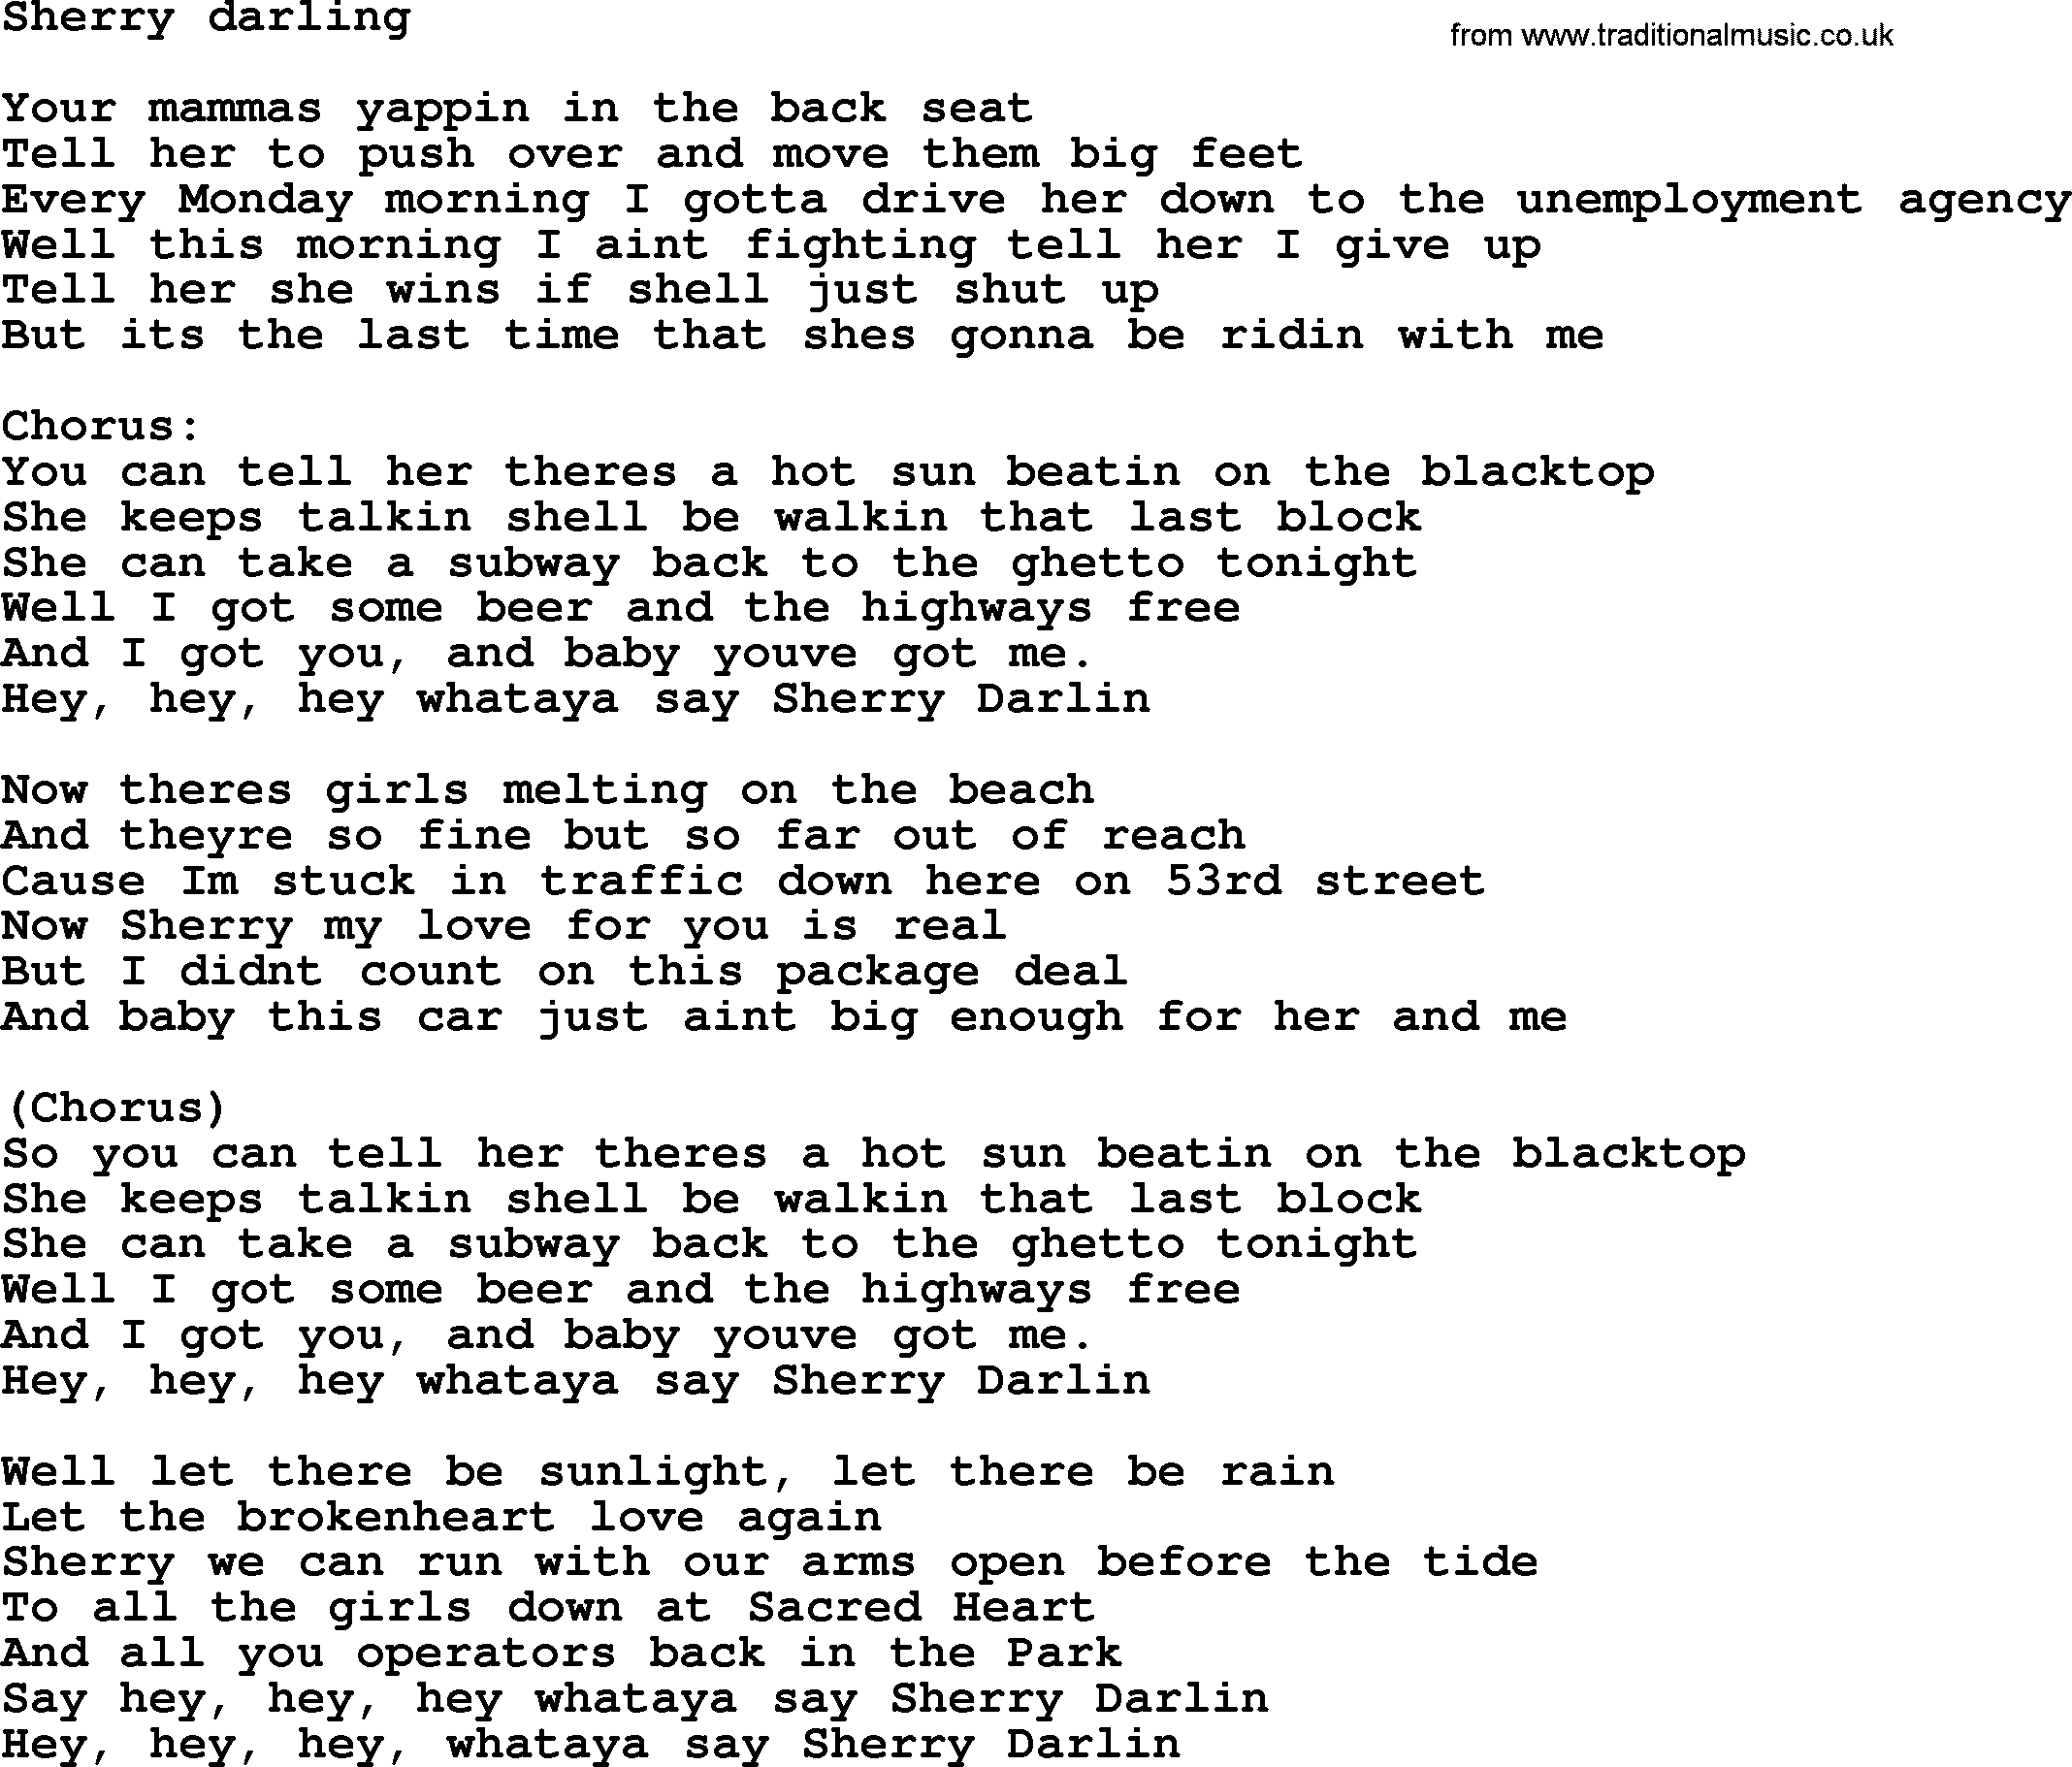 Bruce Springsteen song: Sherry Darling lyrics